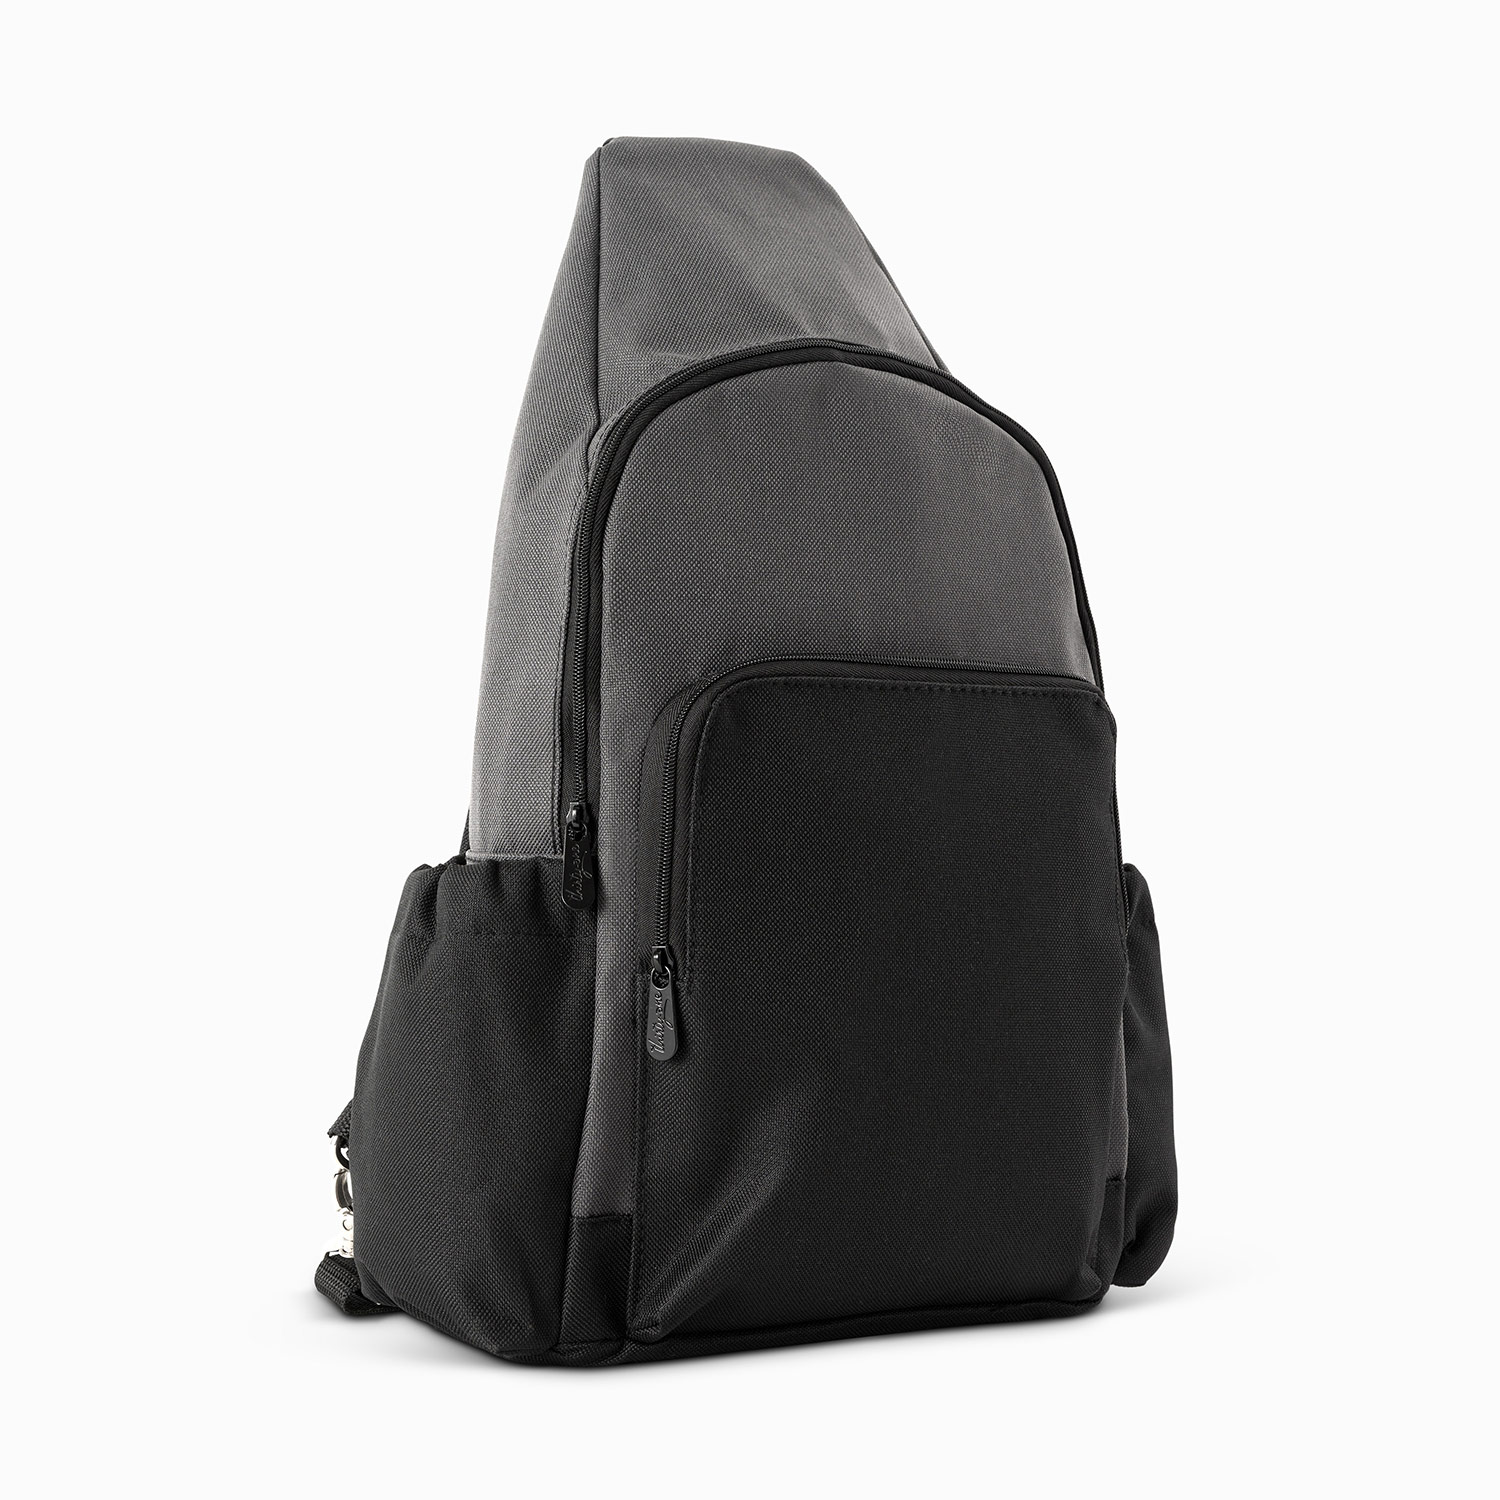 gen verkoopplan Onzeker Black Colorblock - Adjustable Sling Backpack - Thirty-One Gifts -  Affordable Purses, Totes & Bags